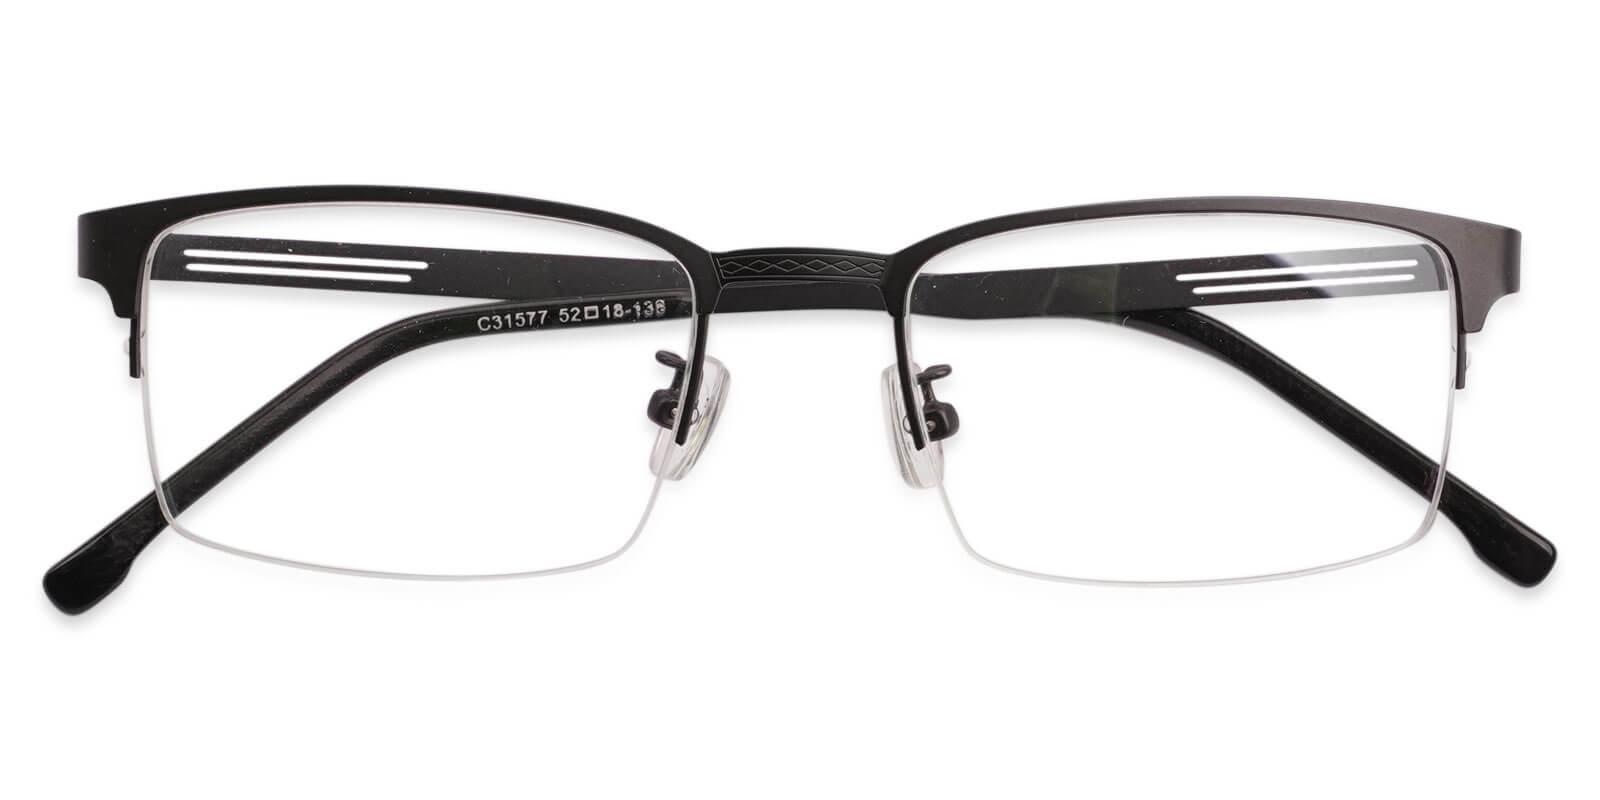 Gabriel Pattern Metal Eyeglasses , NosePads Frames from ABBE Glasses